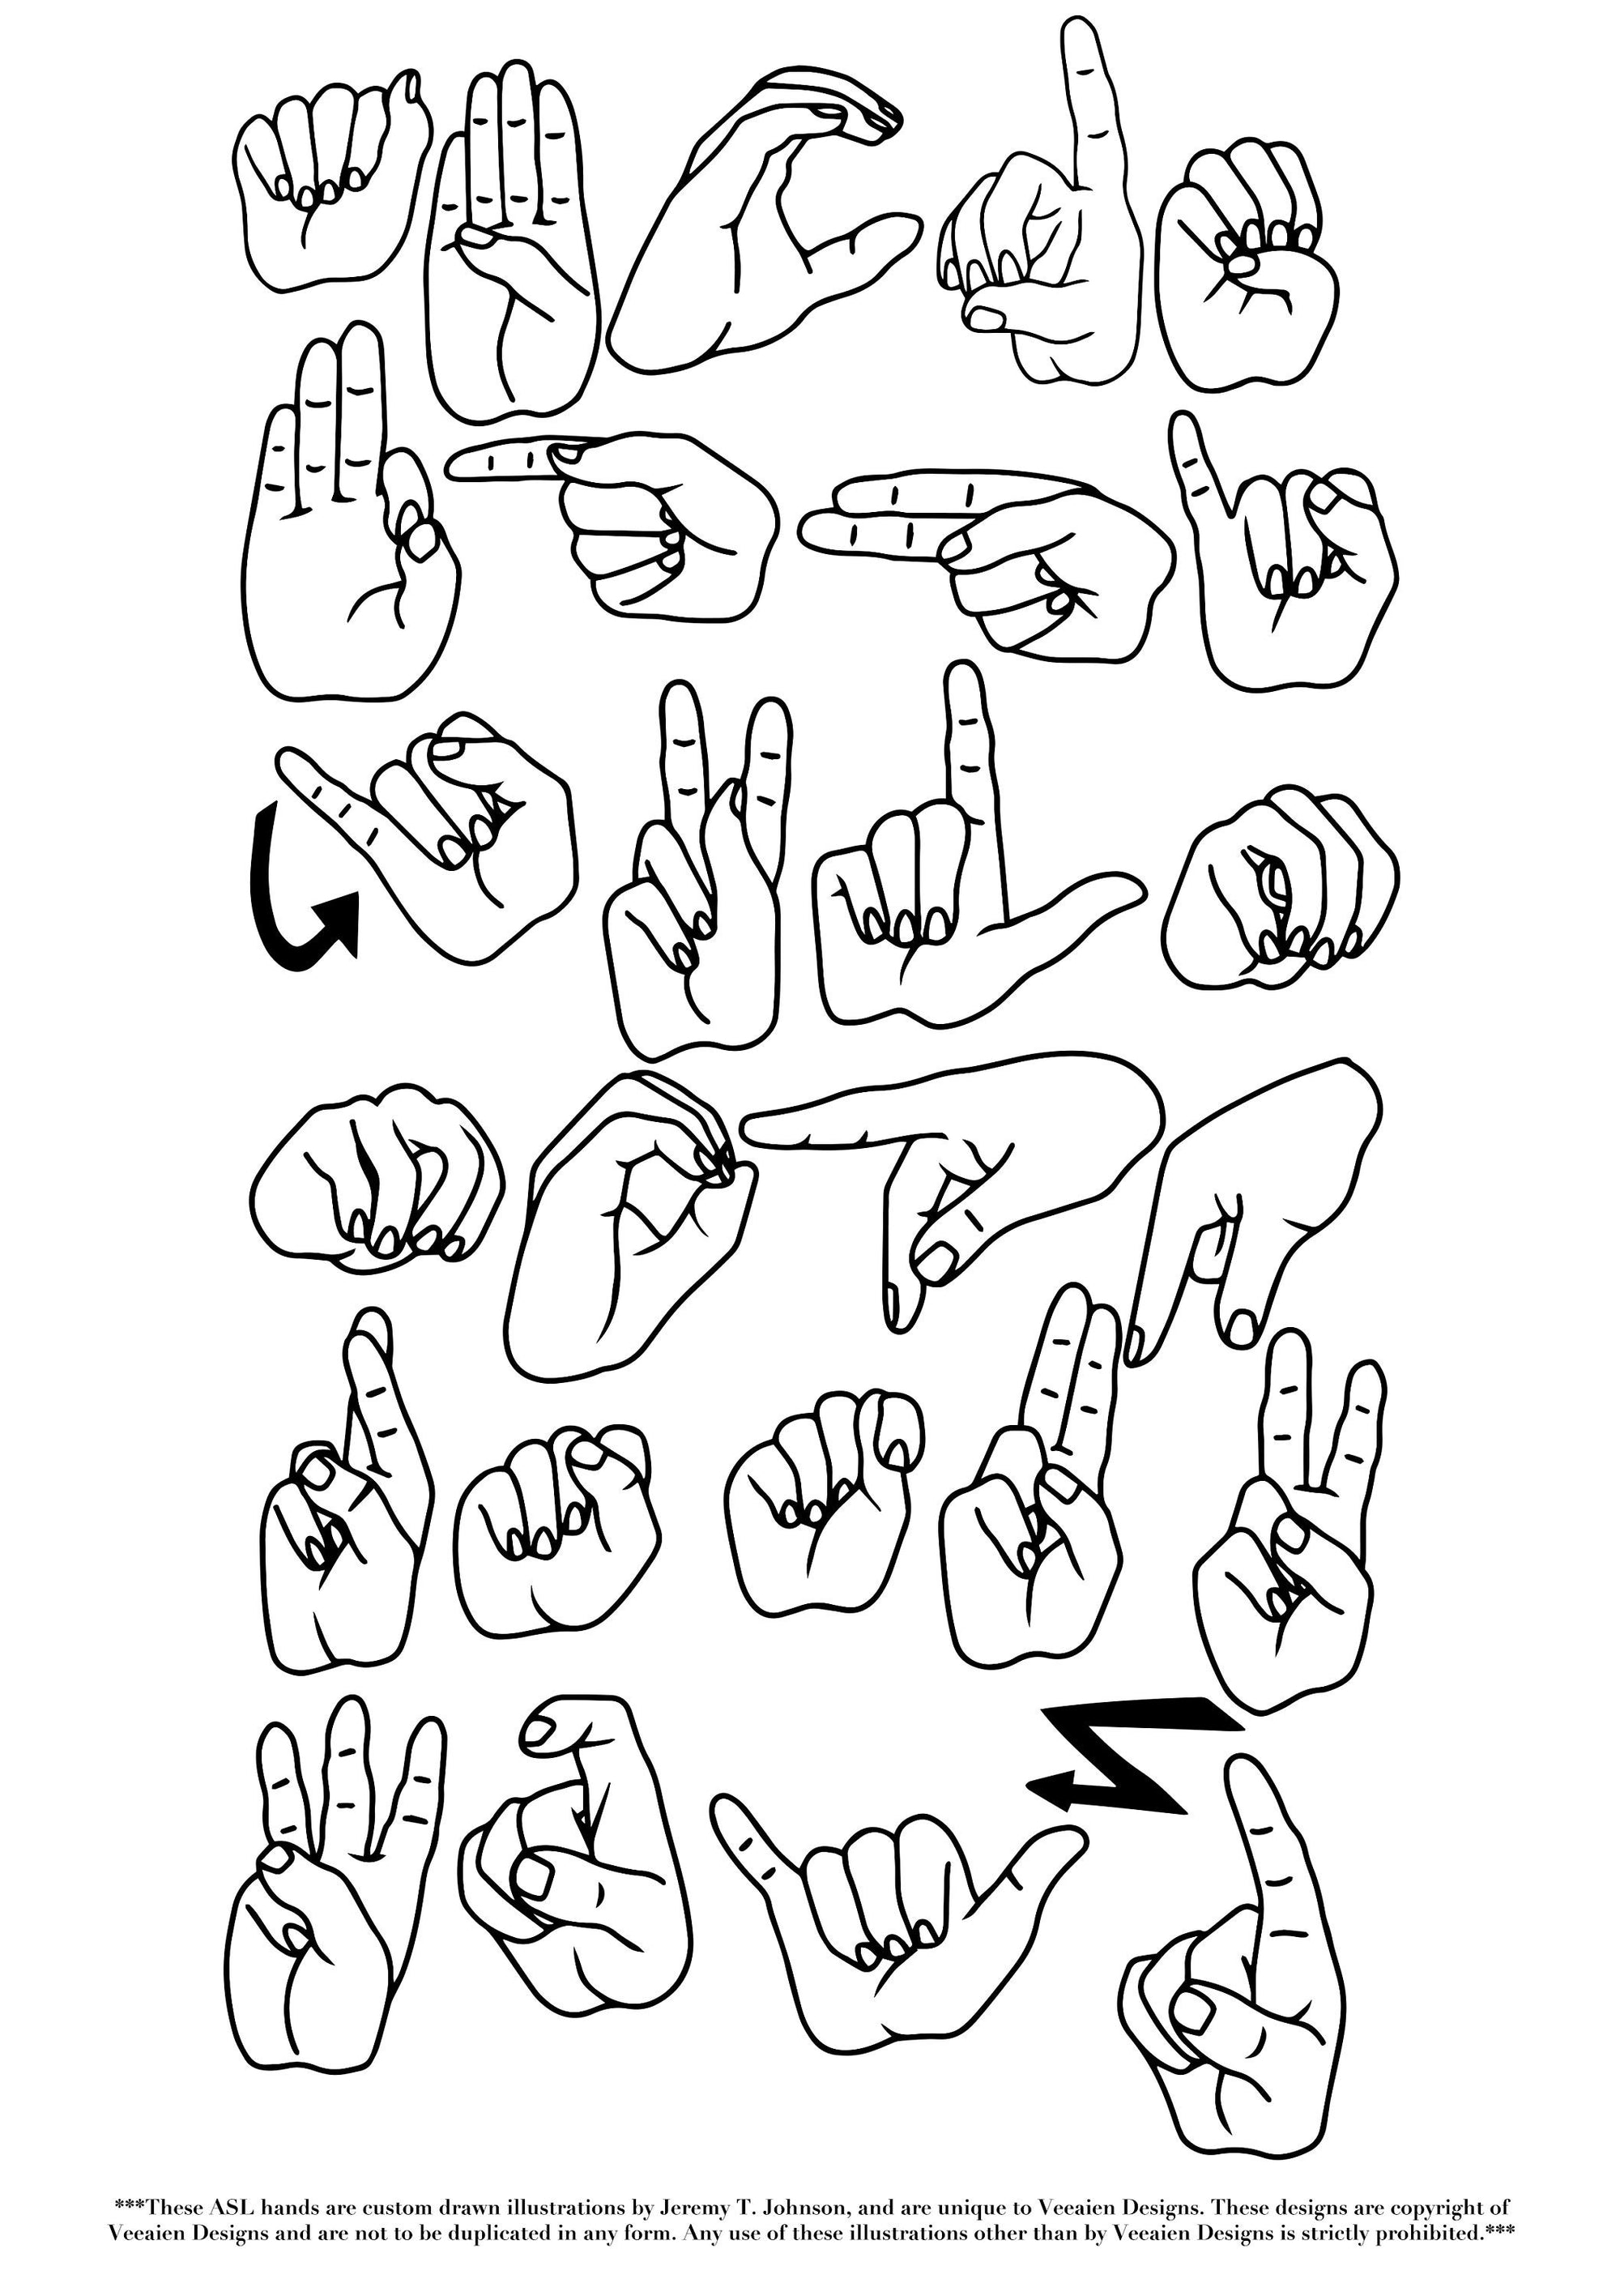 ASL Name Bar Necklace | American Sign Language Gift | ASL Fingerspelling | Sign Jewelry | Name Sign Jewelry | Finger Alphabet | Interpret